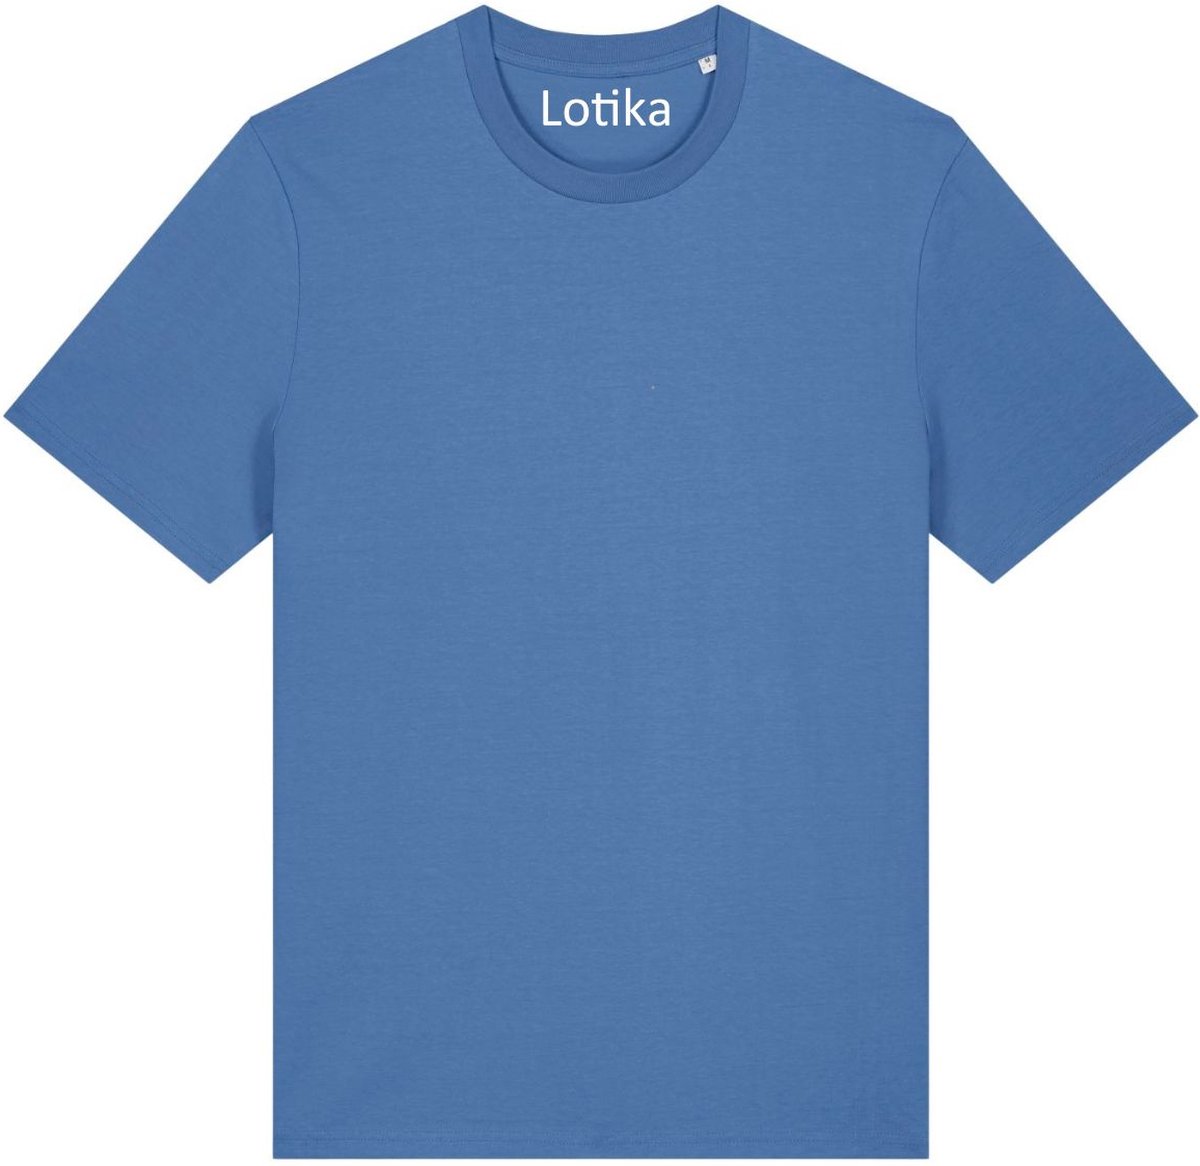 Lotika - Juul T-shirt biologisch katoen - bright blue